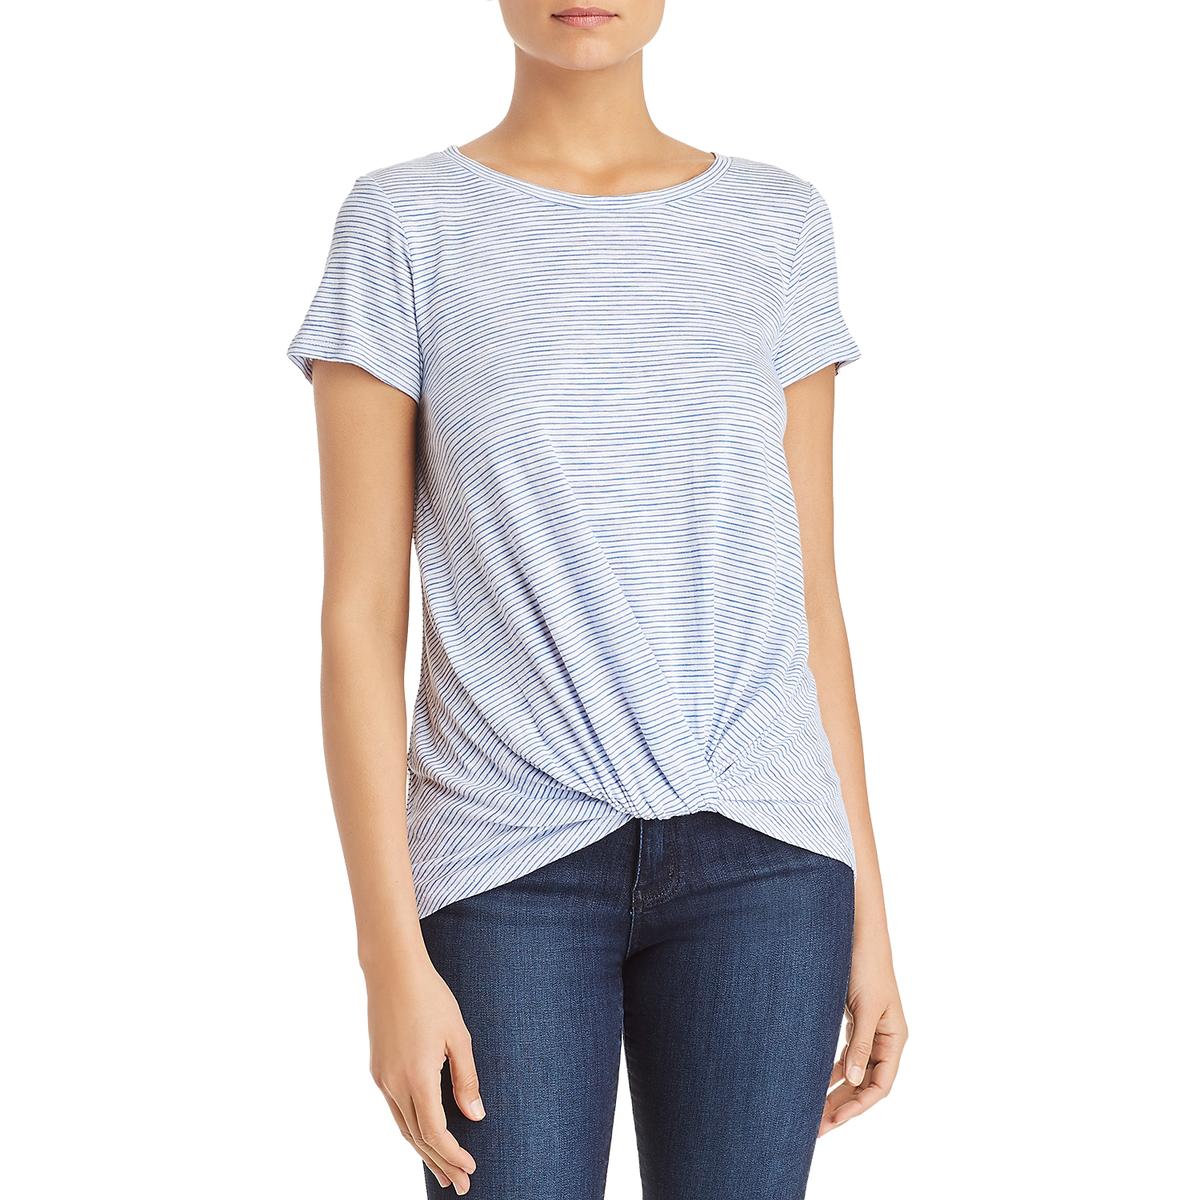 Cupio Womens Striped Twist Front Tee T-Shirt Top BHFO 9902 | eBay